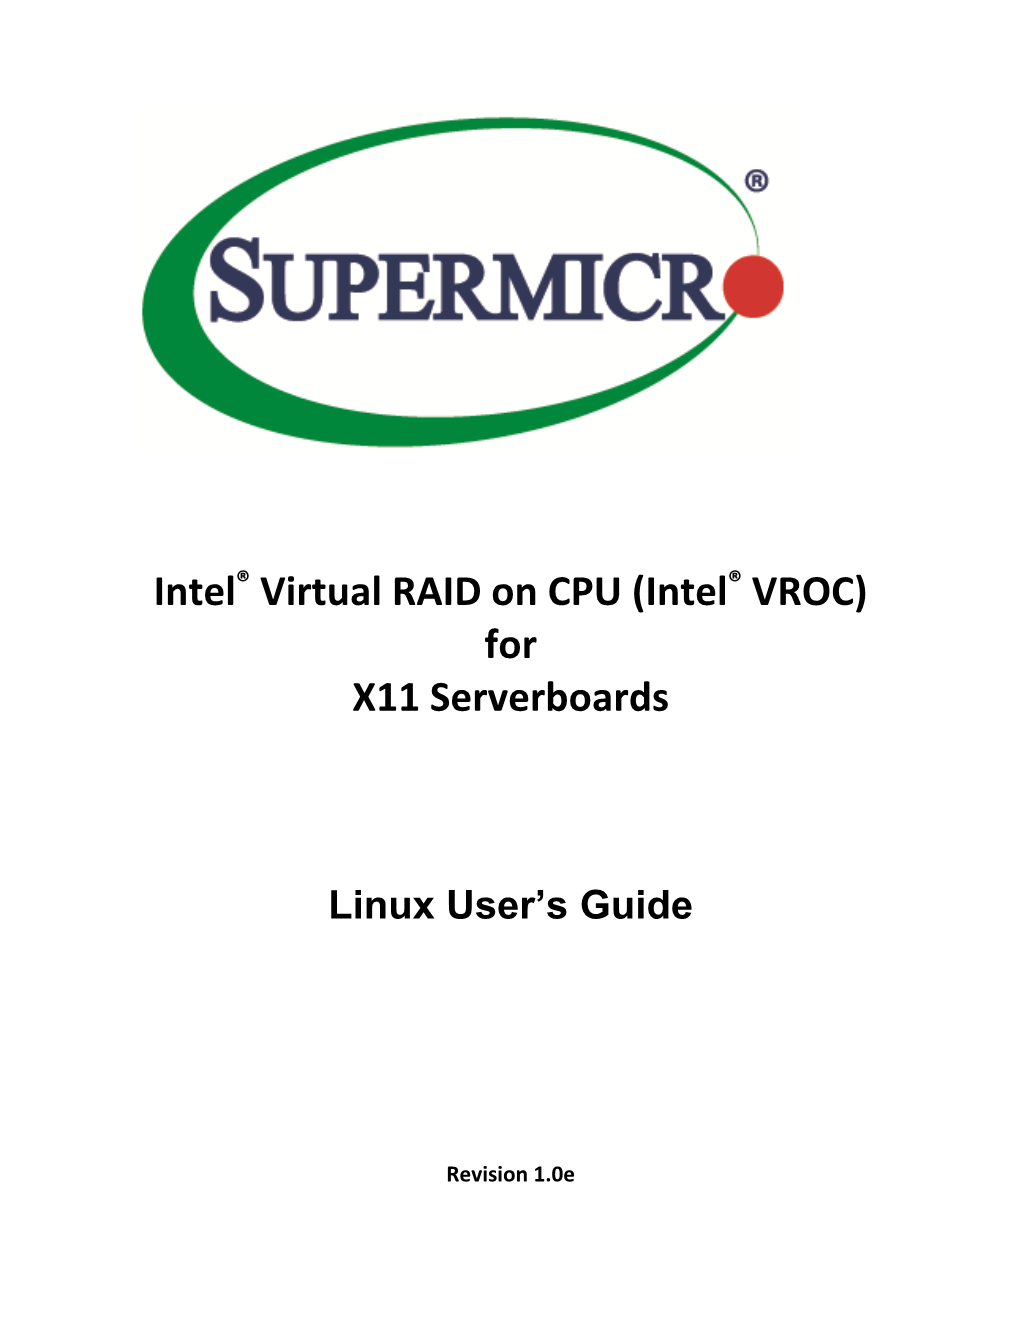 Intel® Virtual RAID on CPU (Intel® VROC) for X11 Serverboards